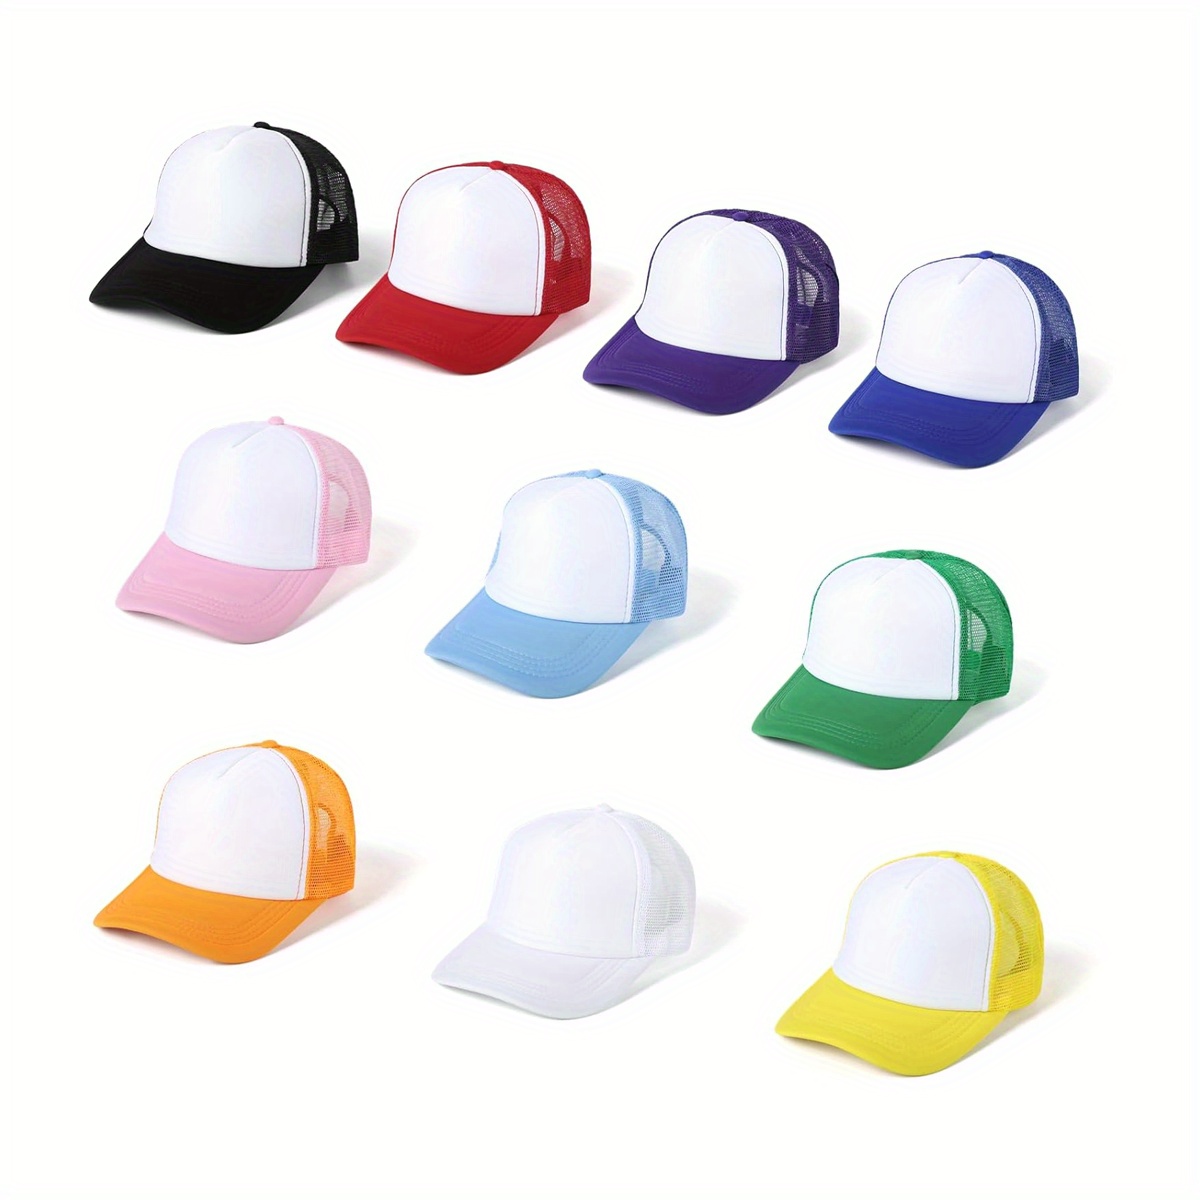 

10pcs Blank Sublimation Trucker Hats, Plain High Crown Foam Front Mesh Back Caps, Adjustable Snapback For Diy Customization